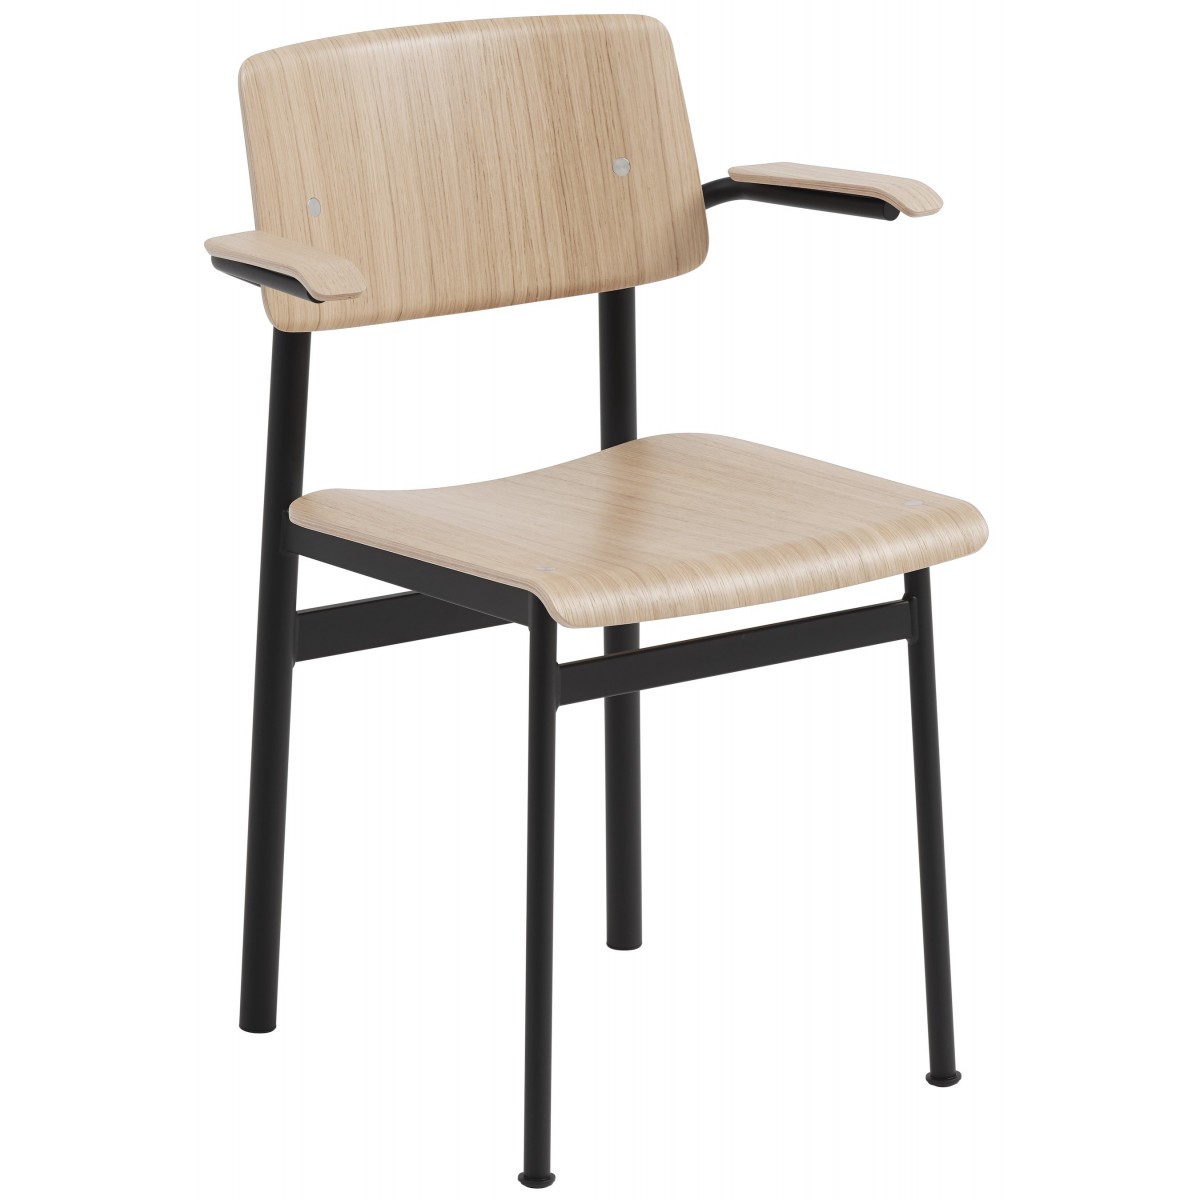 oak / black - Loft chair with armrests